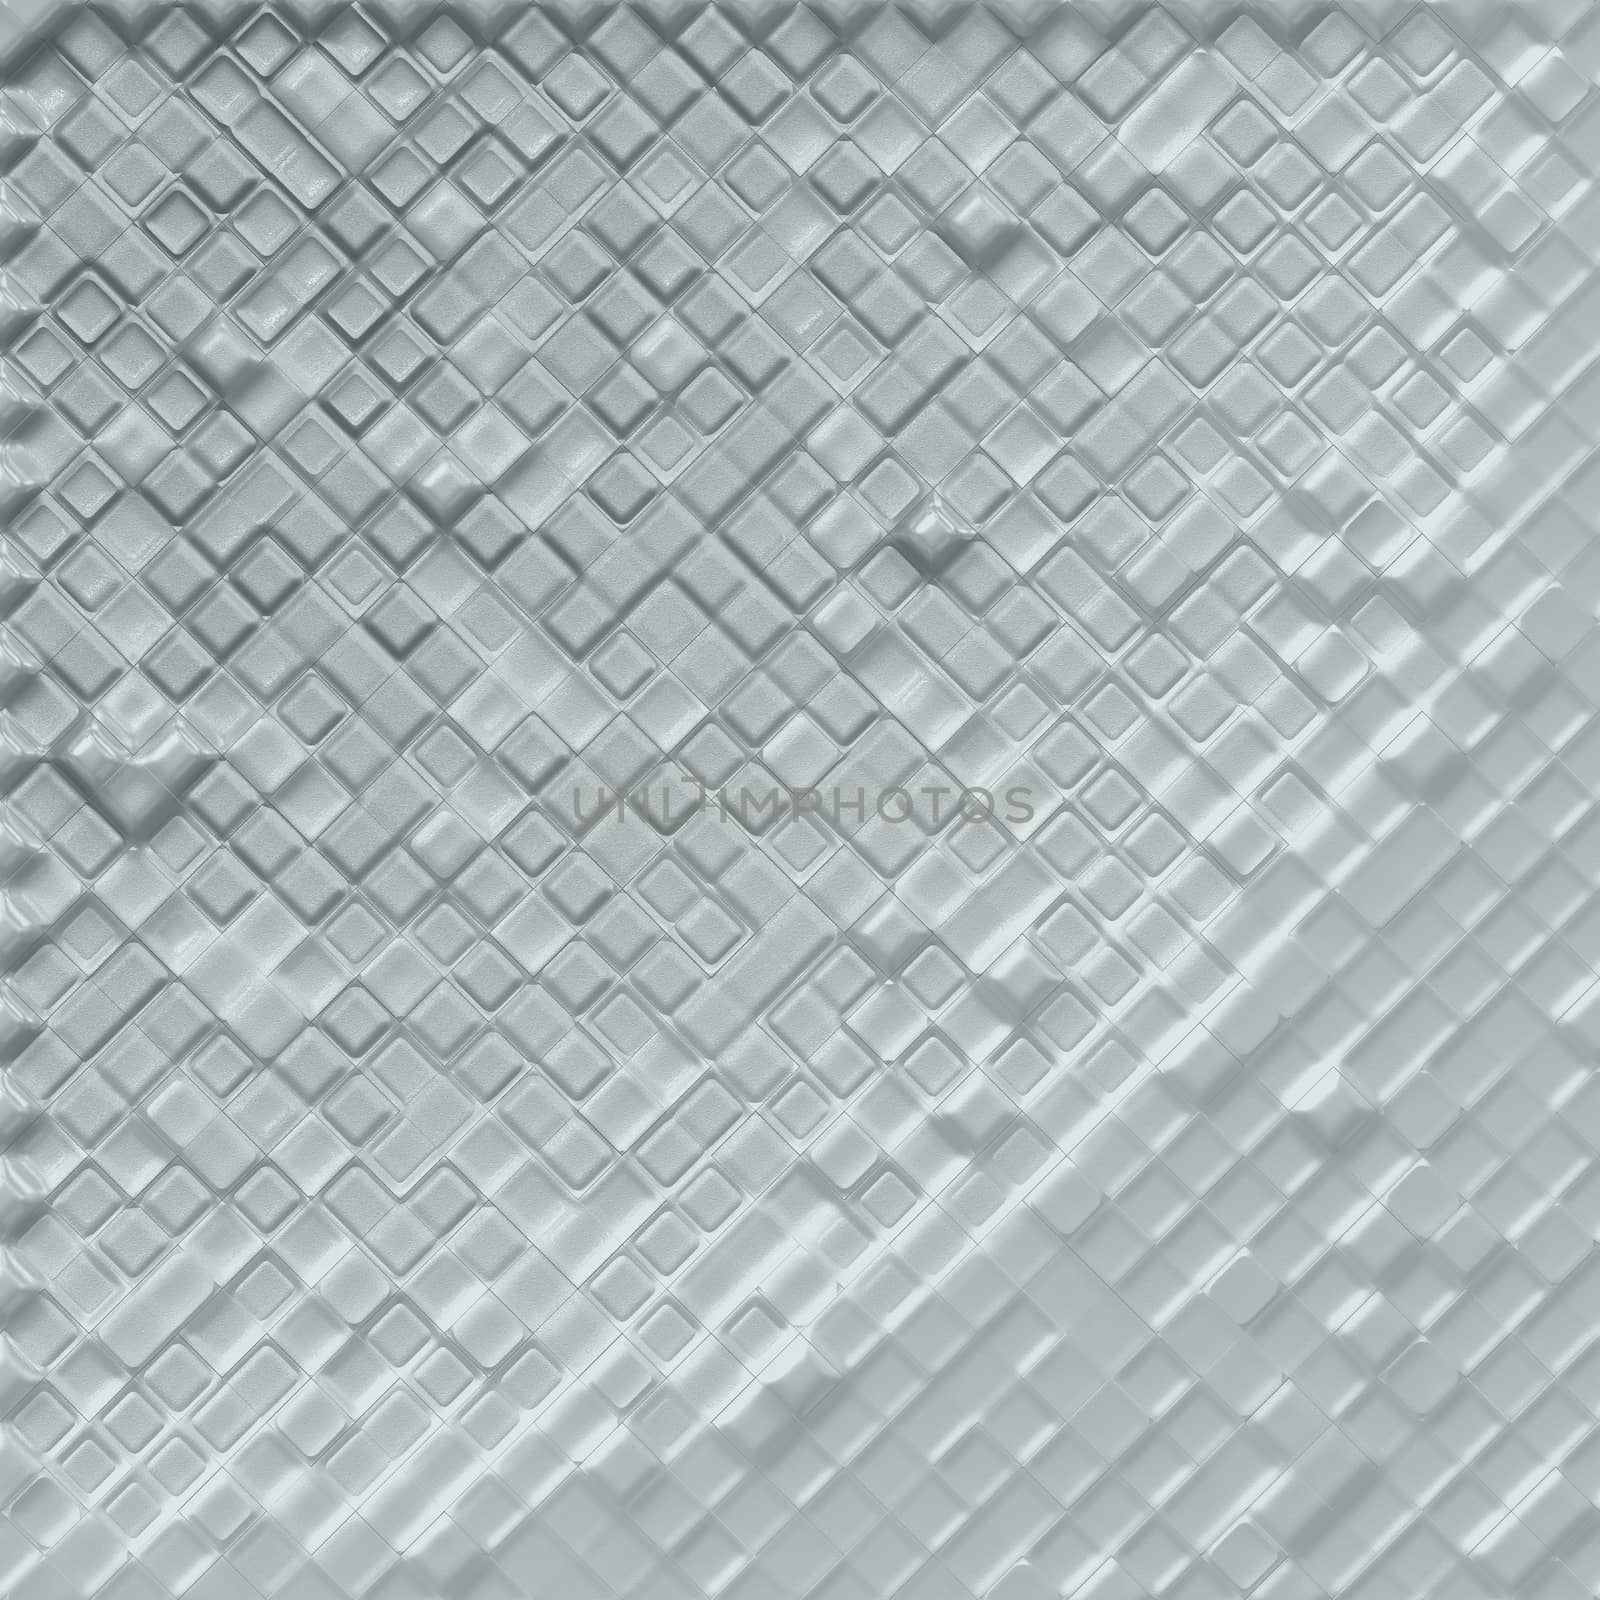 Silver tiles background by Attila